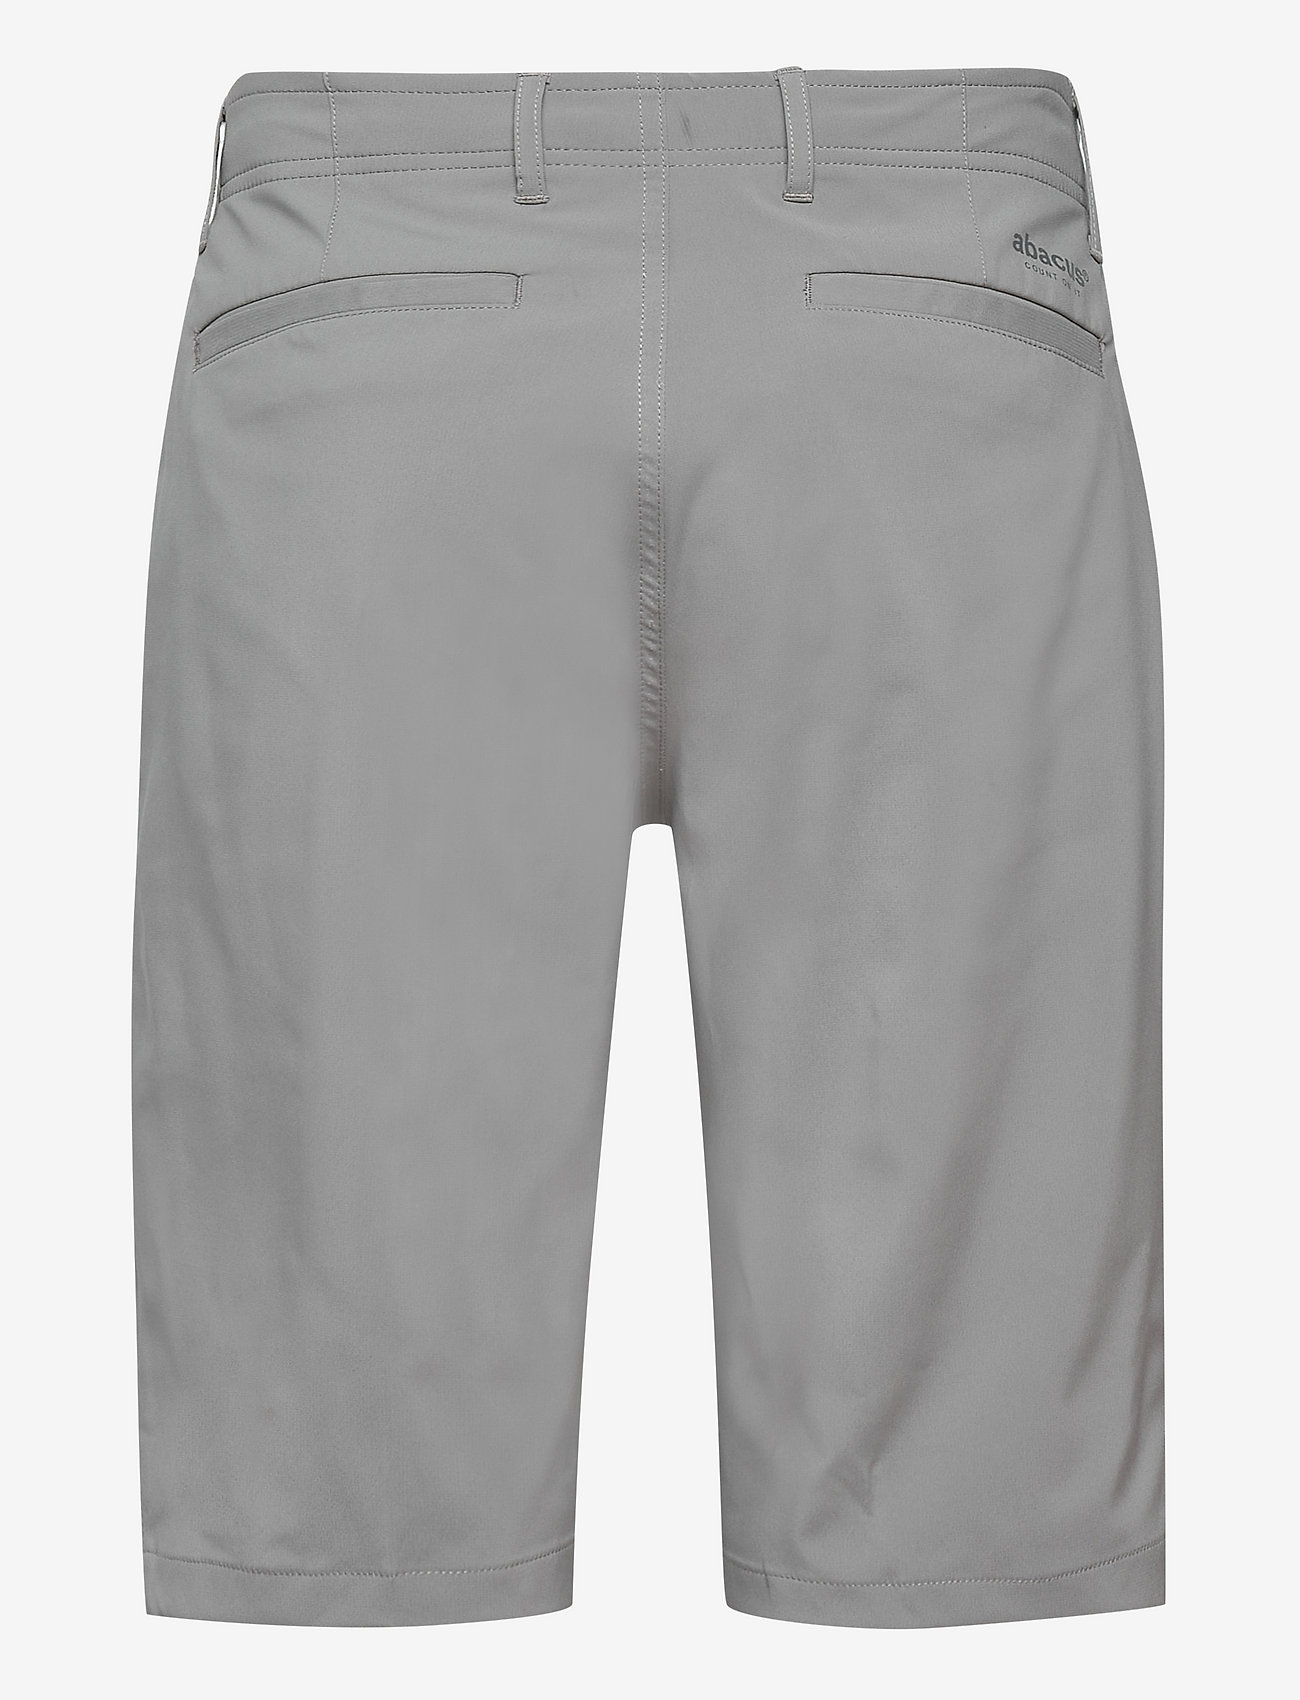 Abacus - Men Cleek flex shorts - lühikesed golfiipüksid - grey - 1